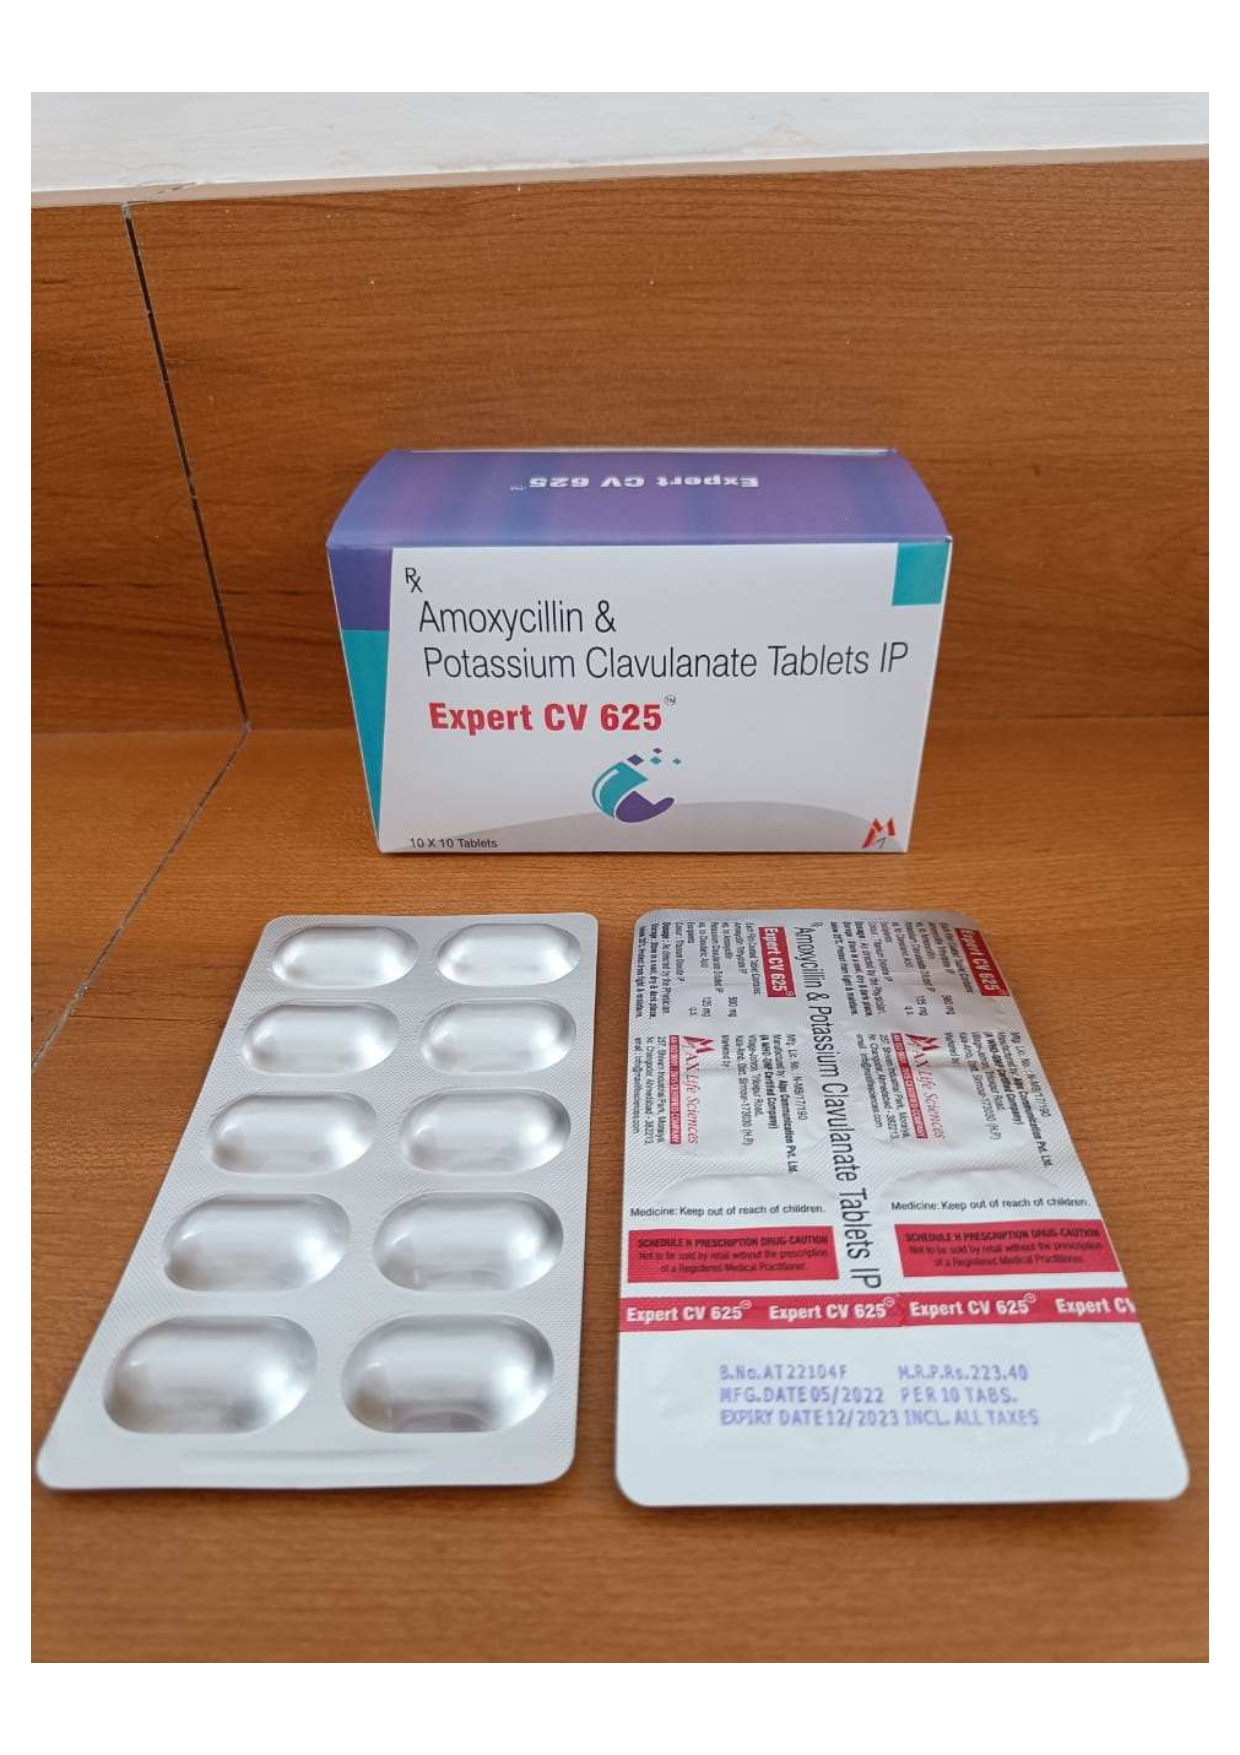 amoxycillin 500mg + clavulanic acid 125mg tablets